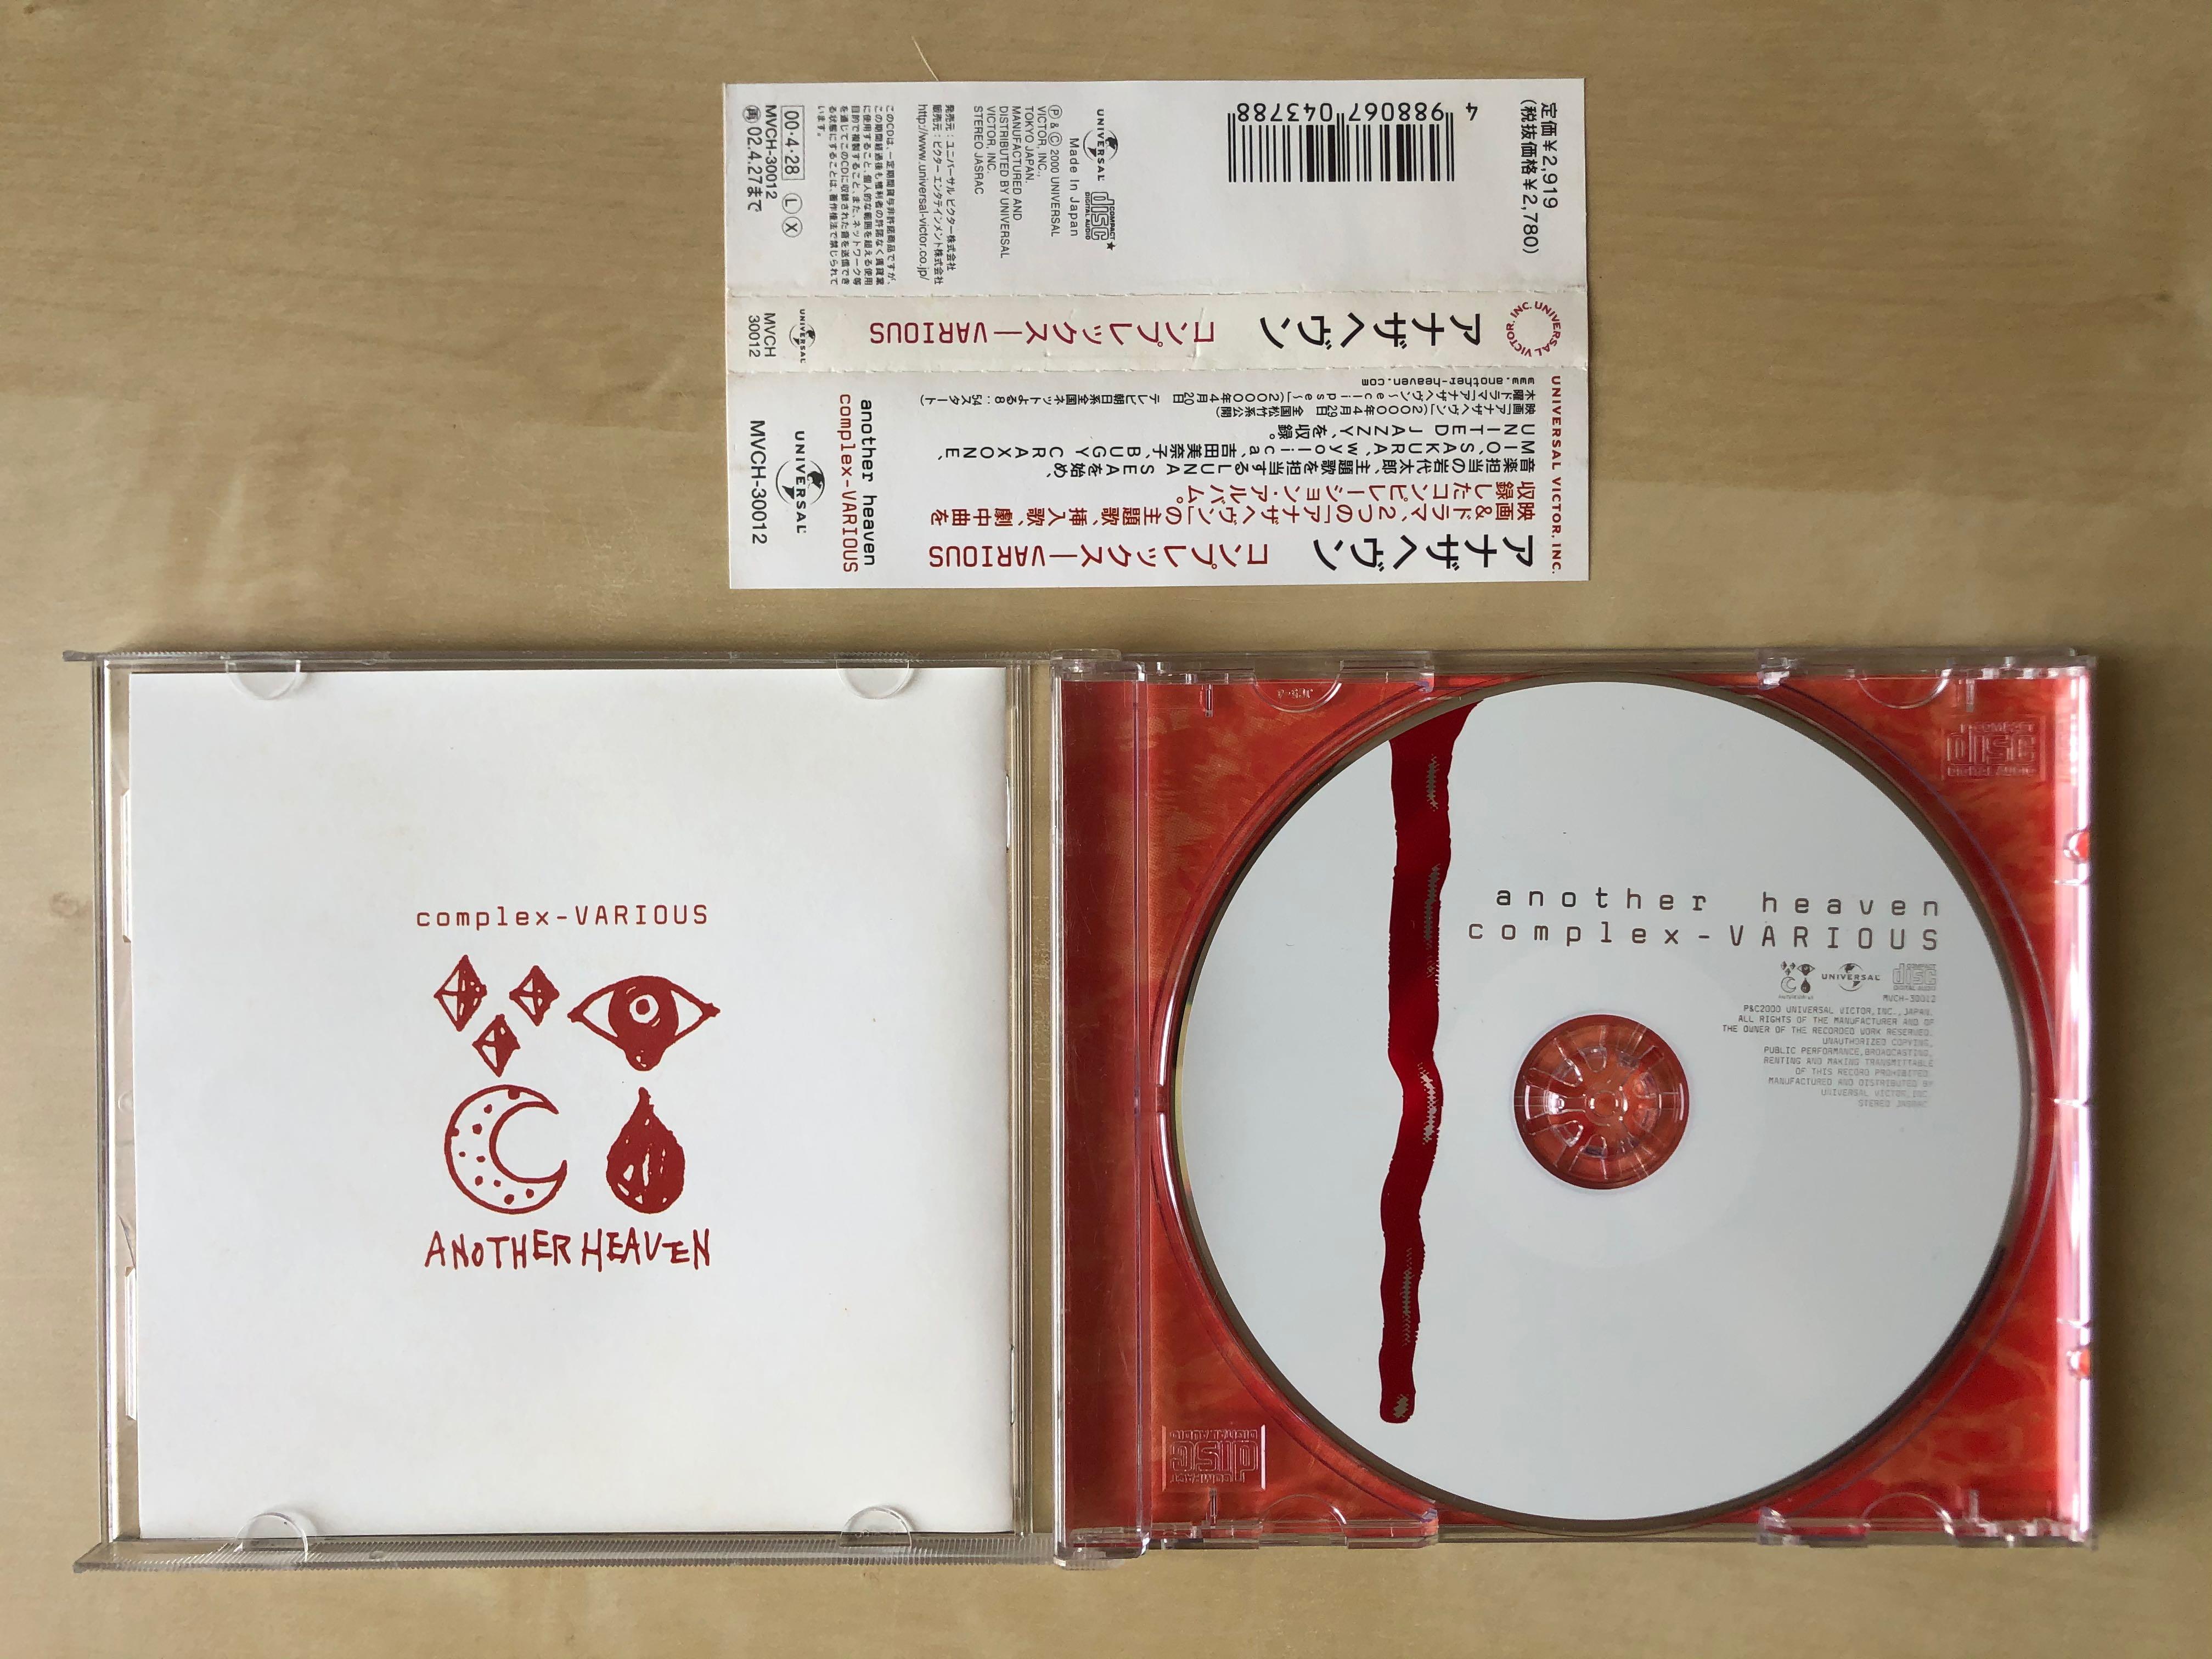 CD丨日本電影映畫Another Heaven Complex-various 日本版OST 岩代太郎 